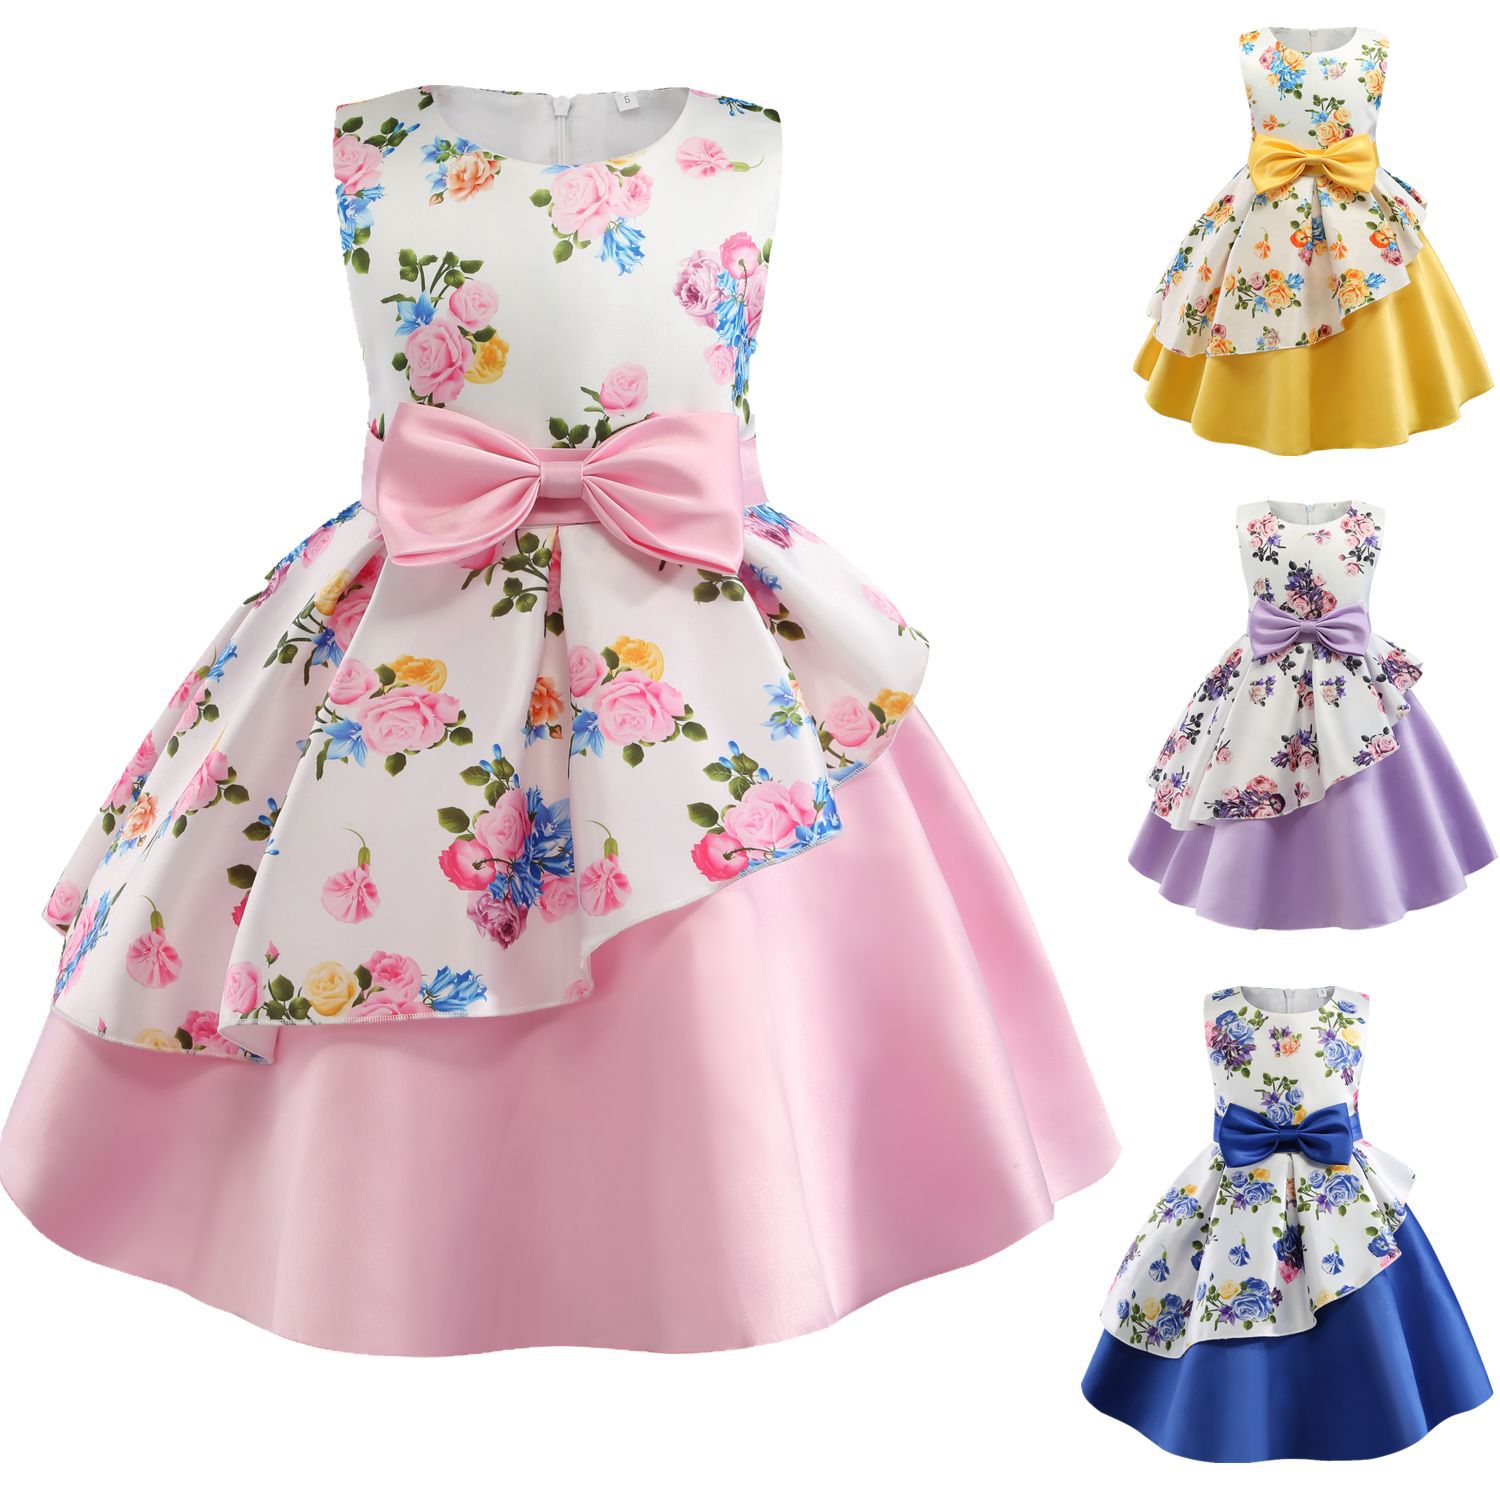 Girls' dress irregular skirt print children's dress bow costume ...